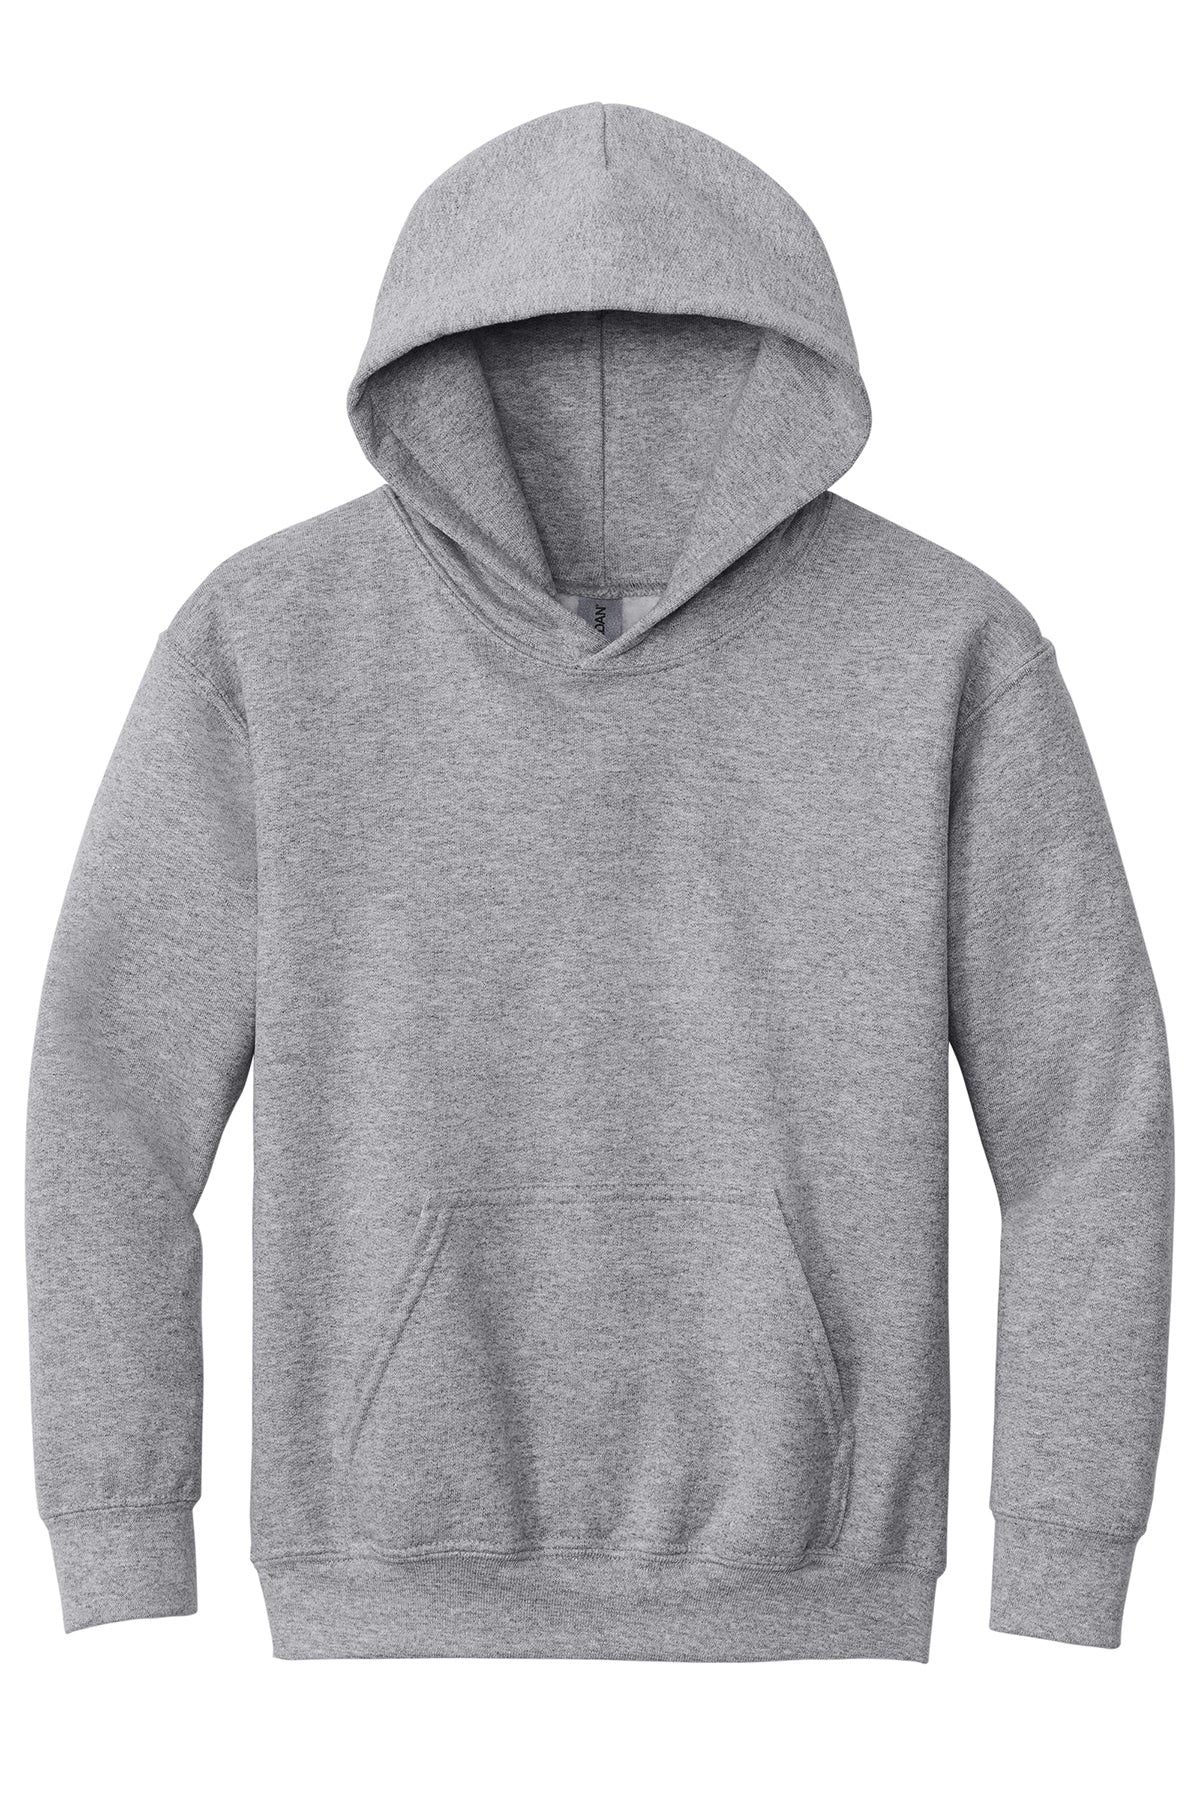 Port & Company® Essential Fleece Pullover Hooded Sweatshirt pc90h ...